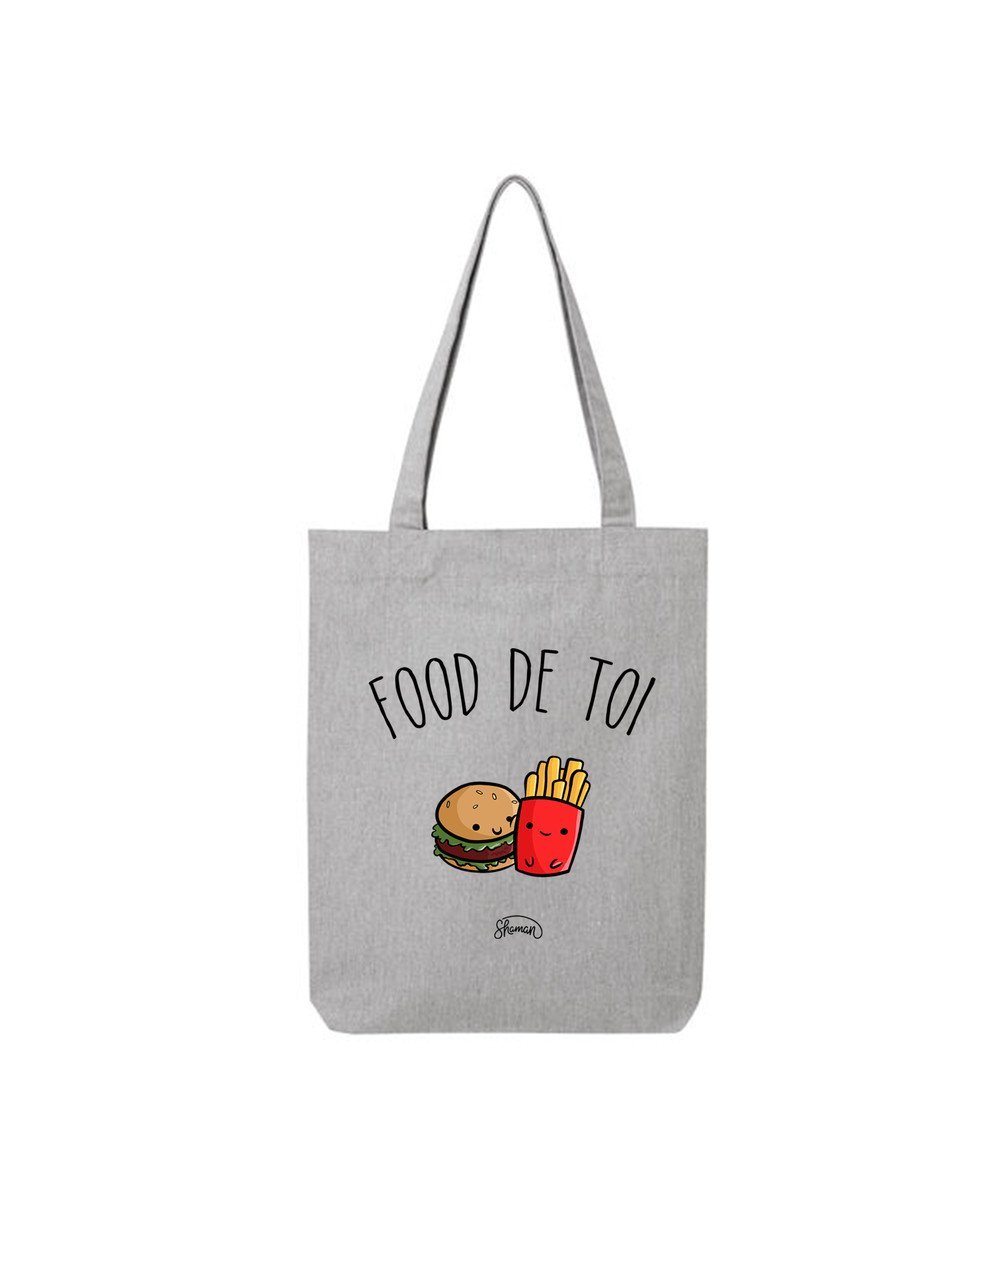 Tote Bag "Food de toi"